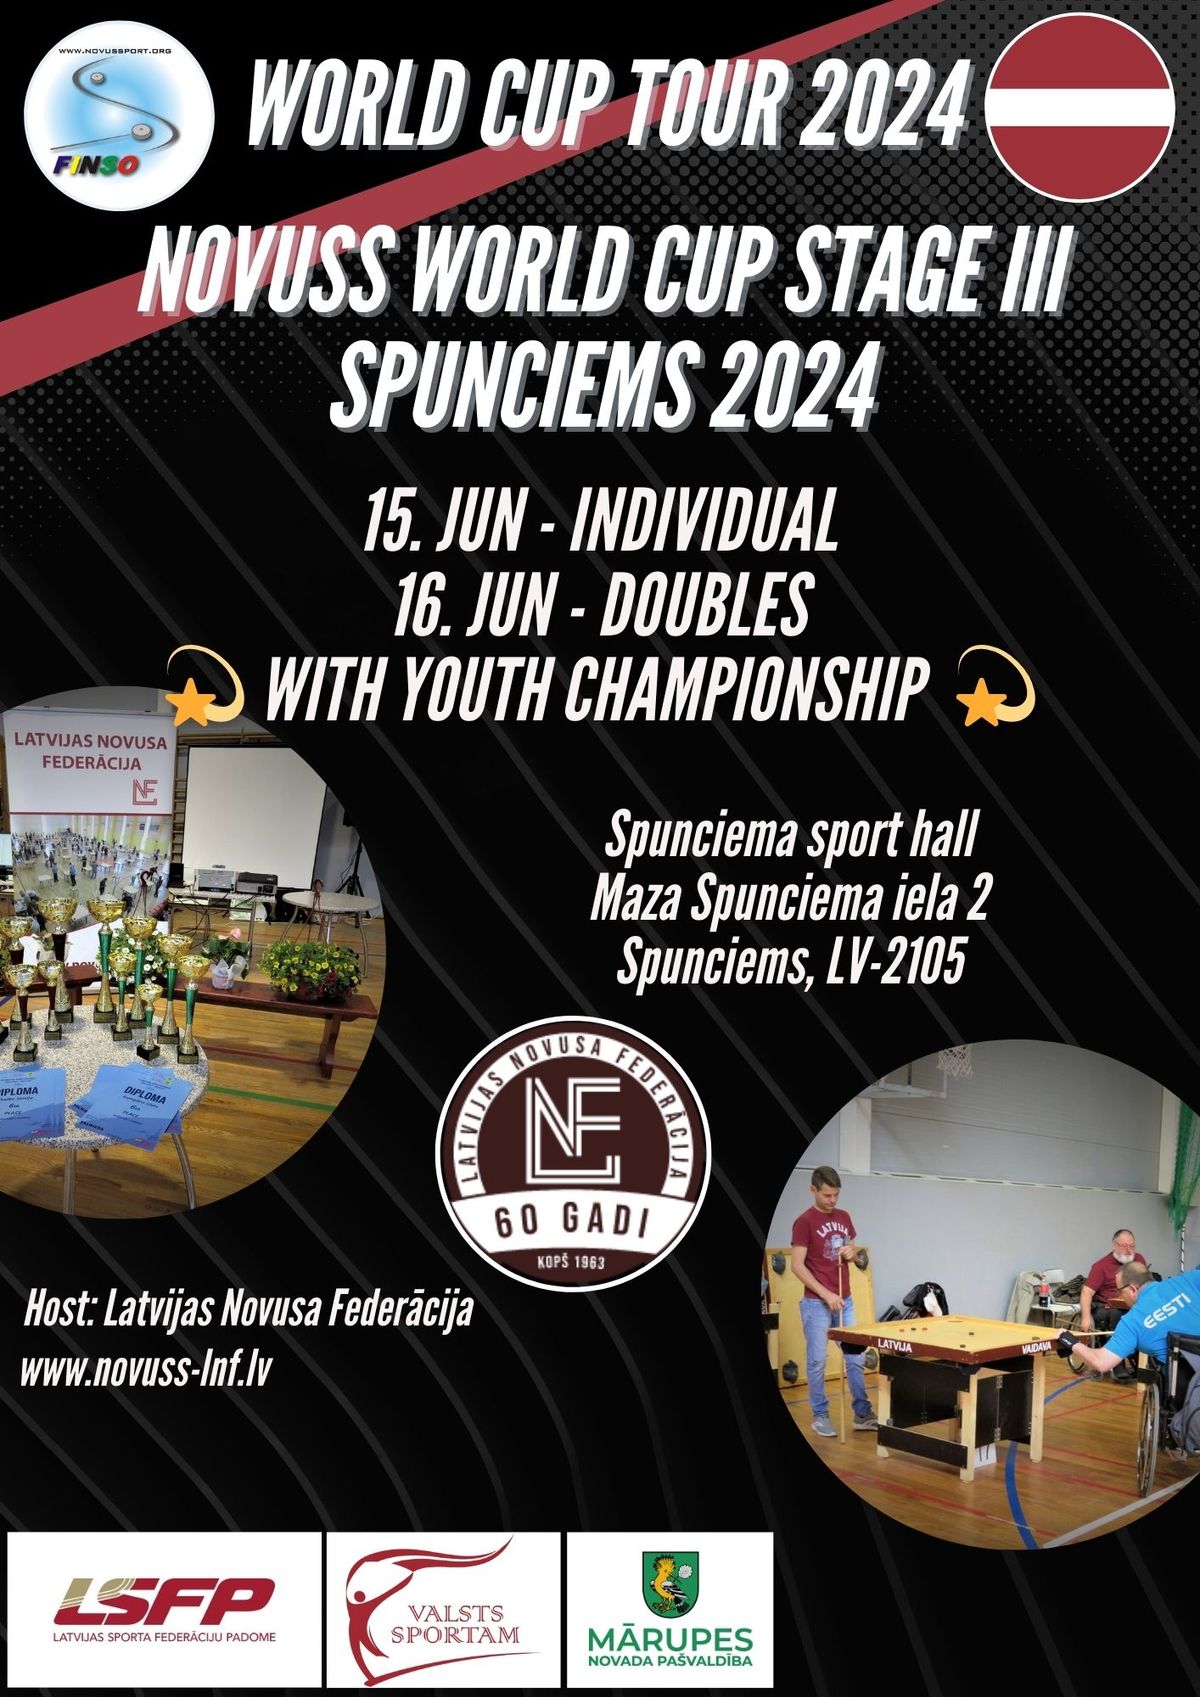 ?? Novuss World Cup Stage III